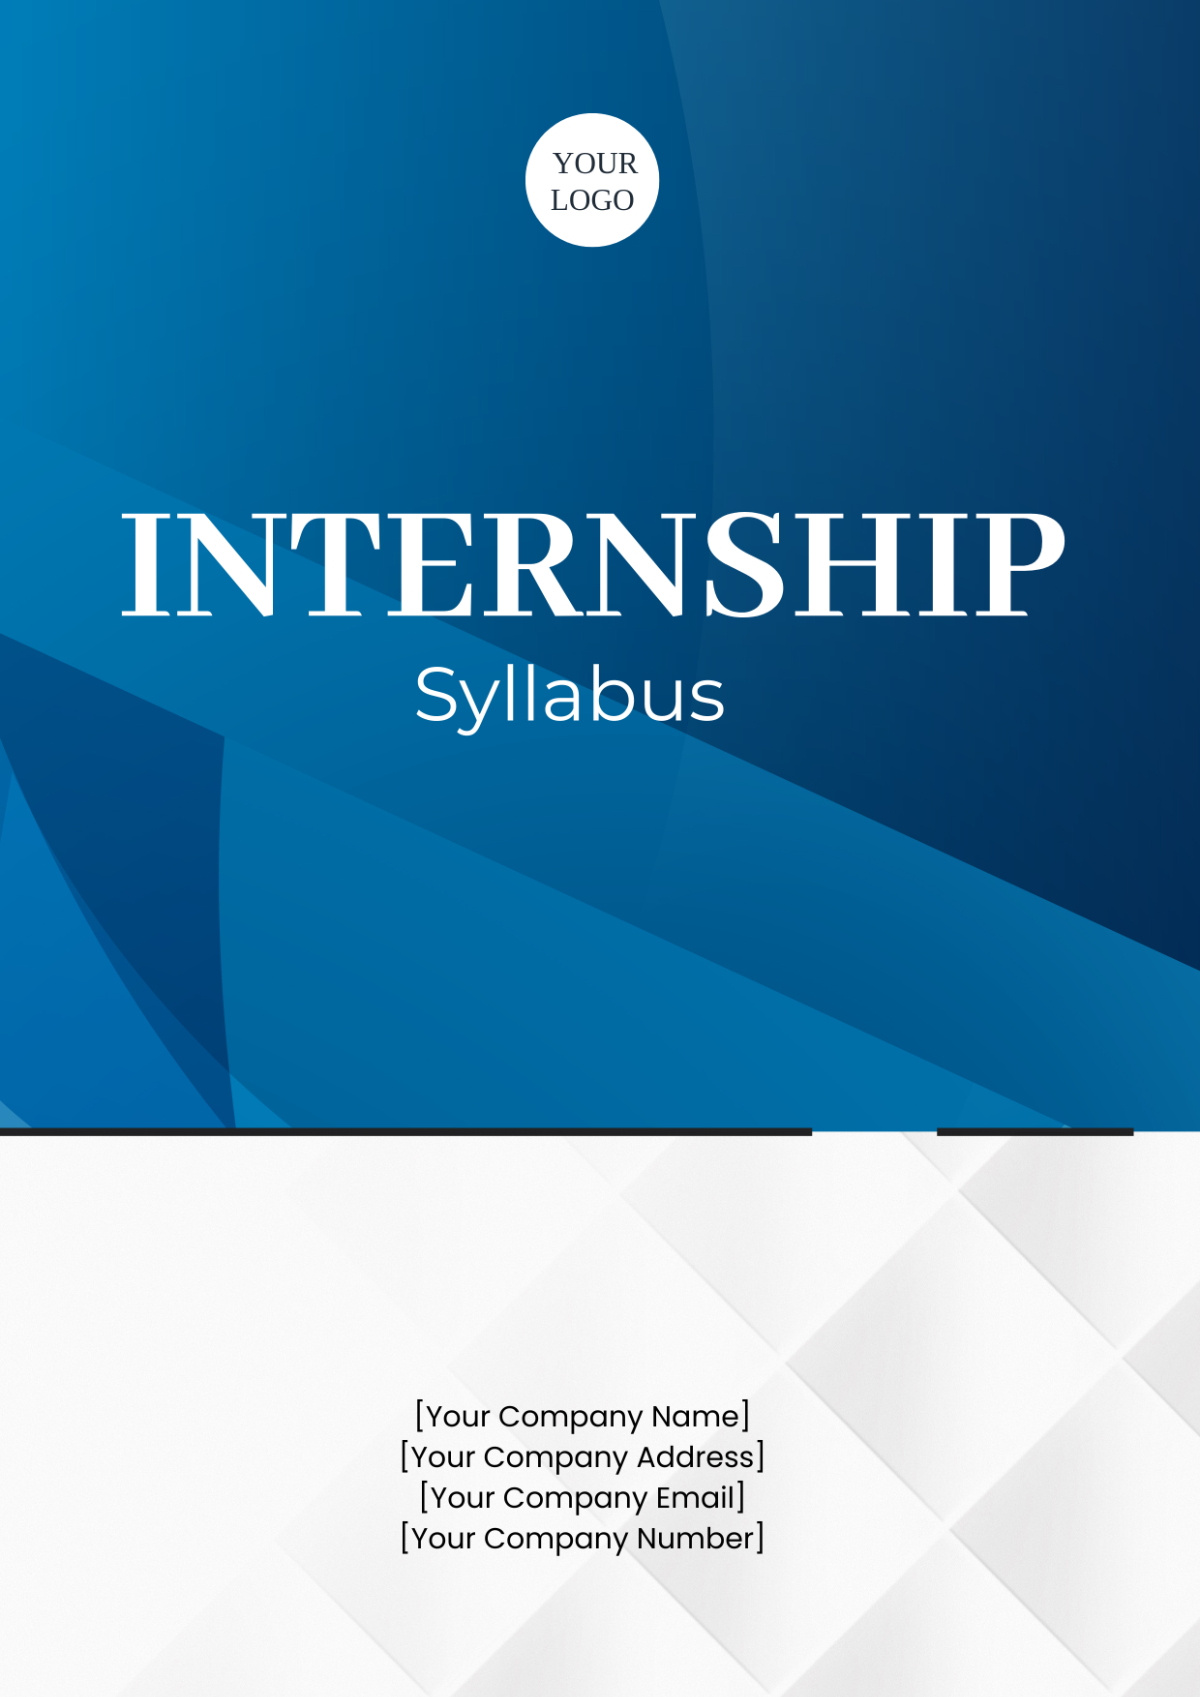 Internship Syllabus Cover Page